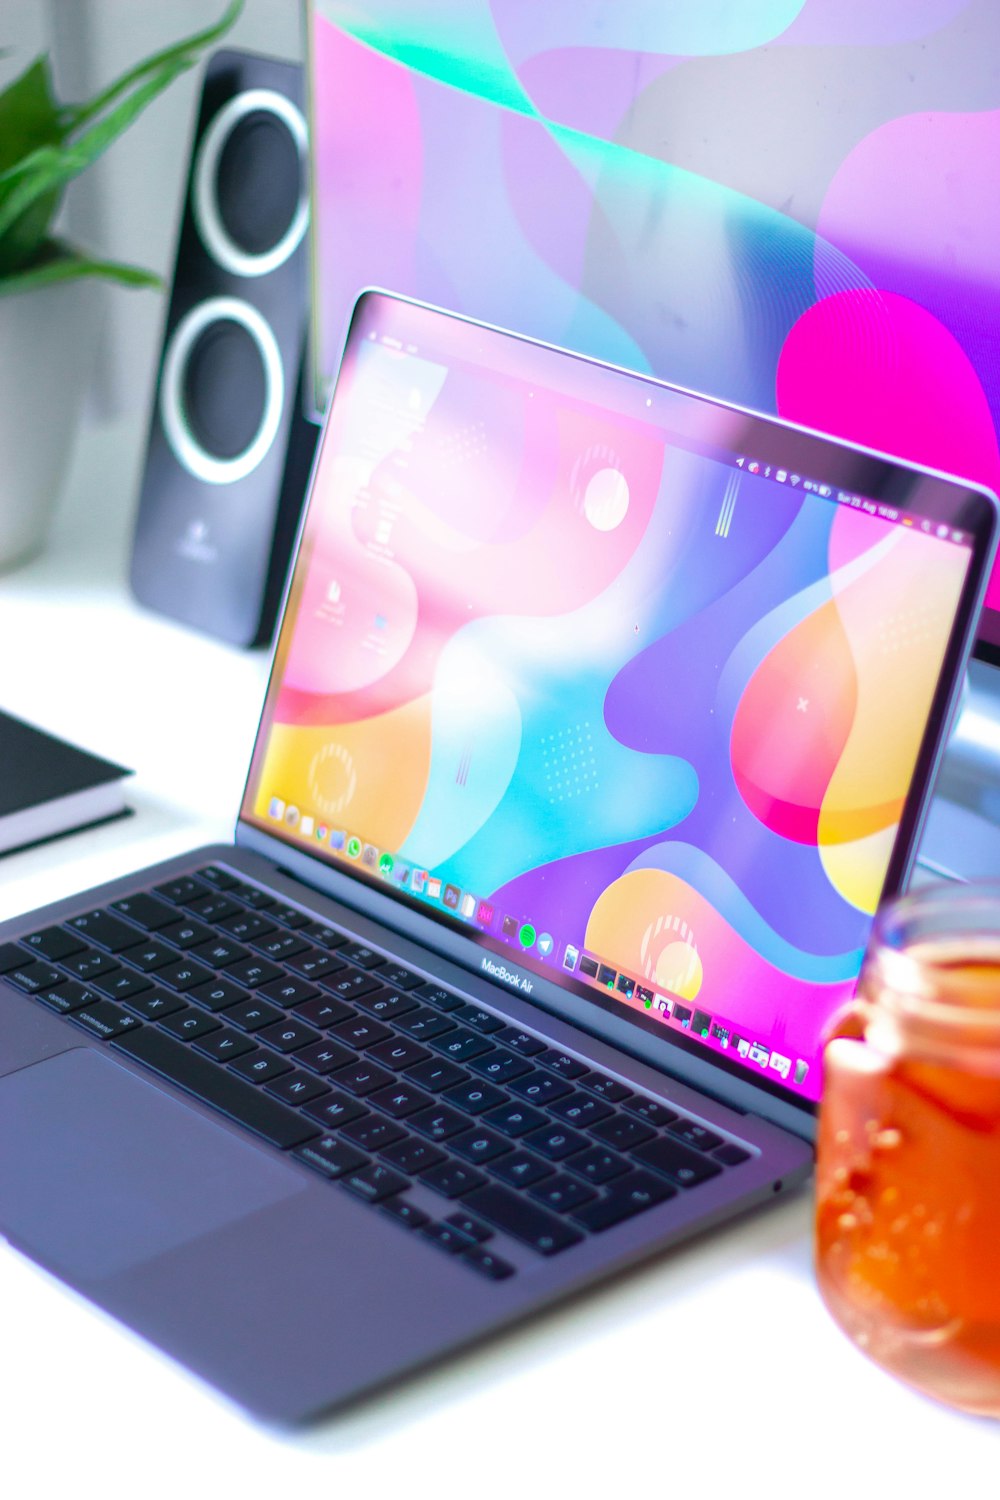 macbook pro turned on displaying desktop